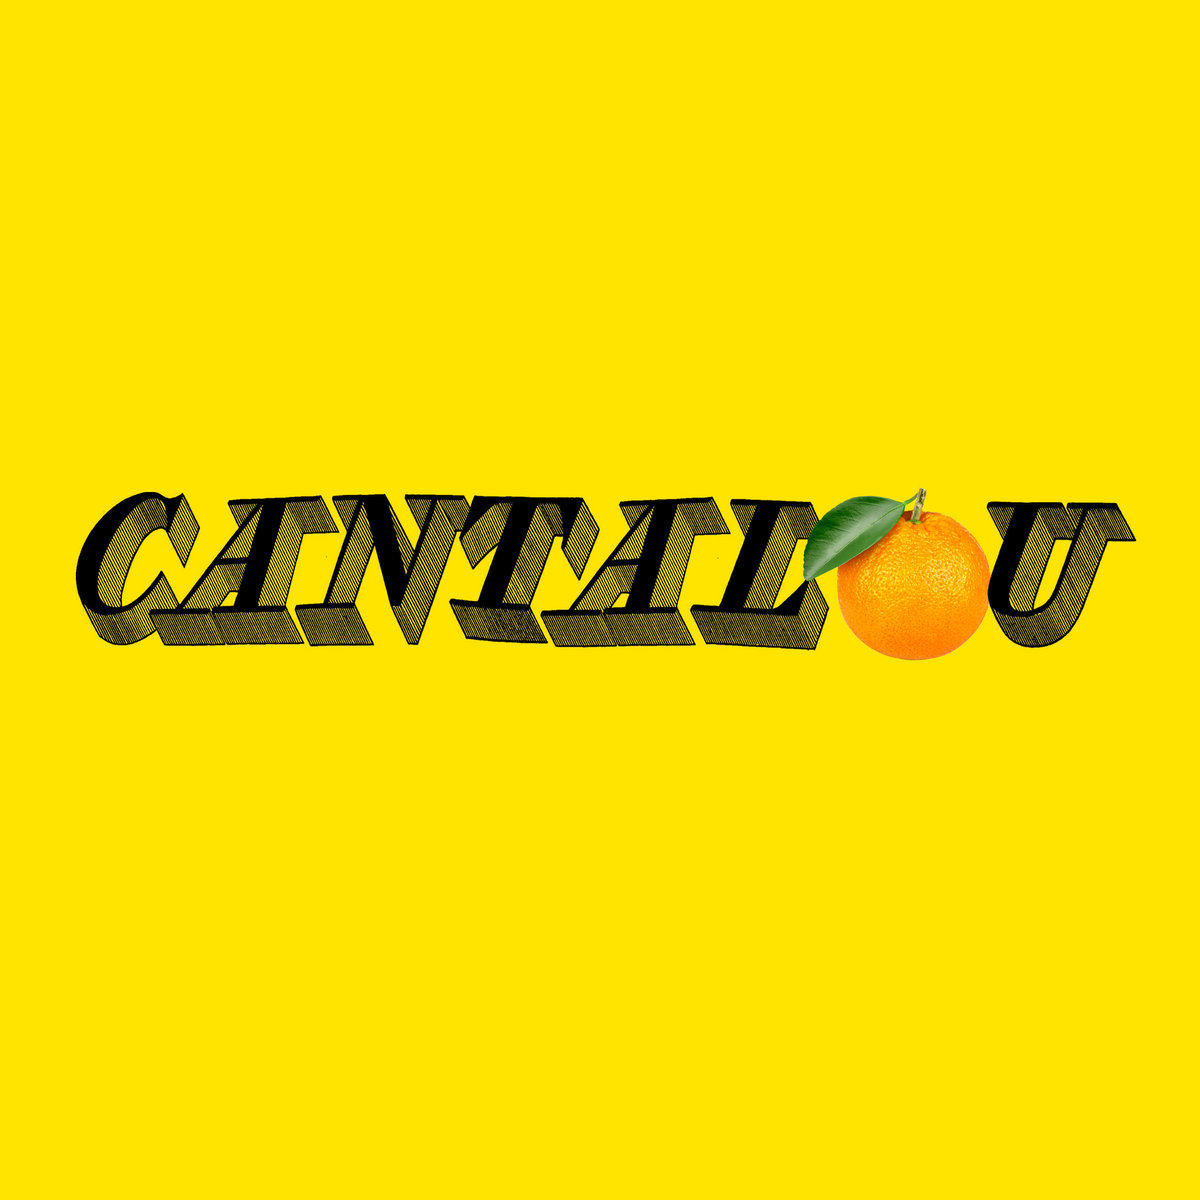 Cantalou | Thierry Larose